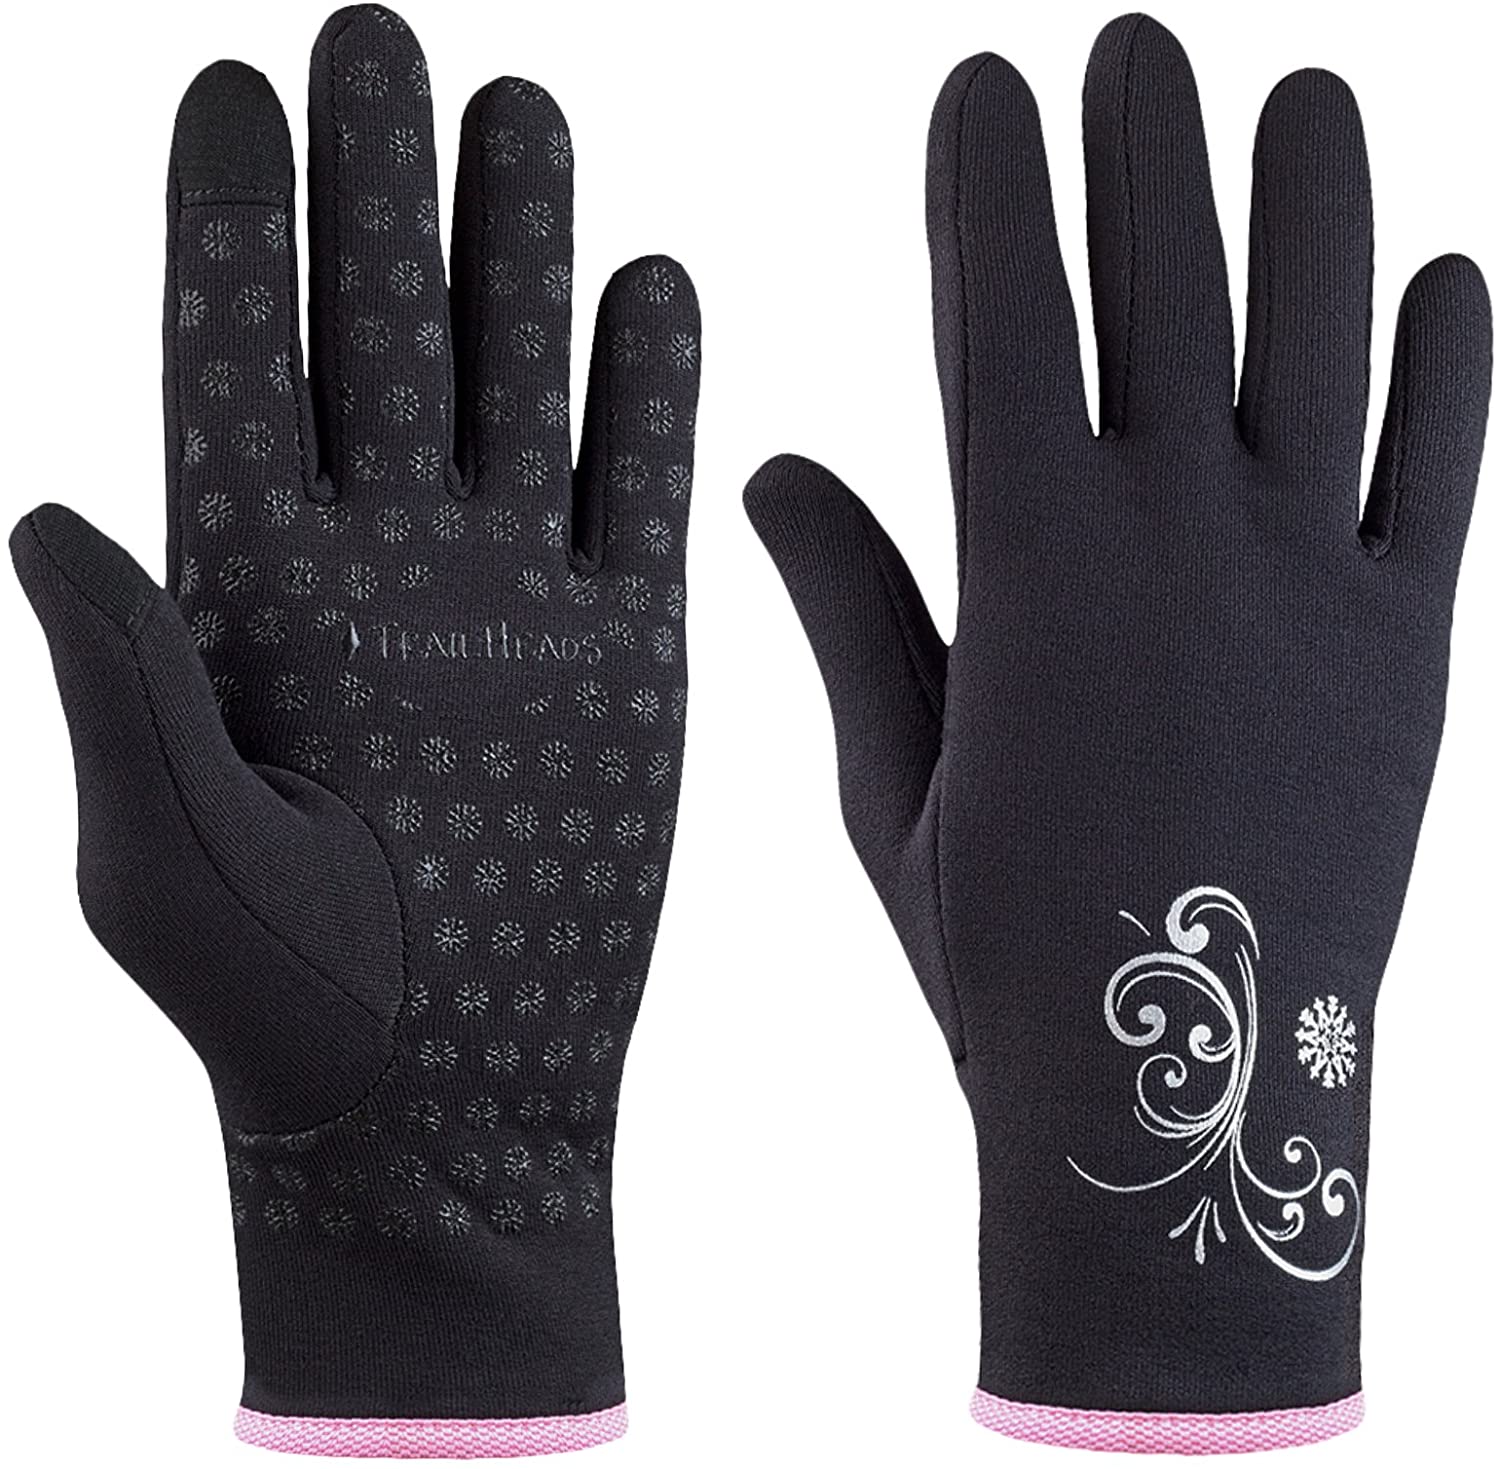 Lightweight winter gloves for running